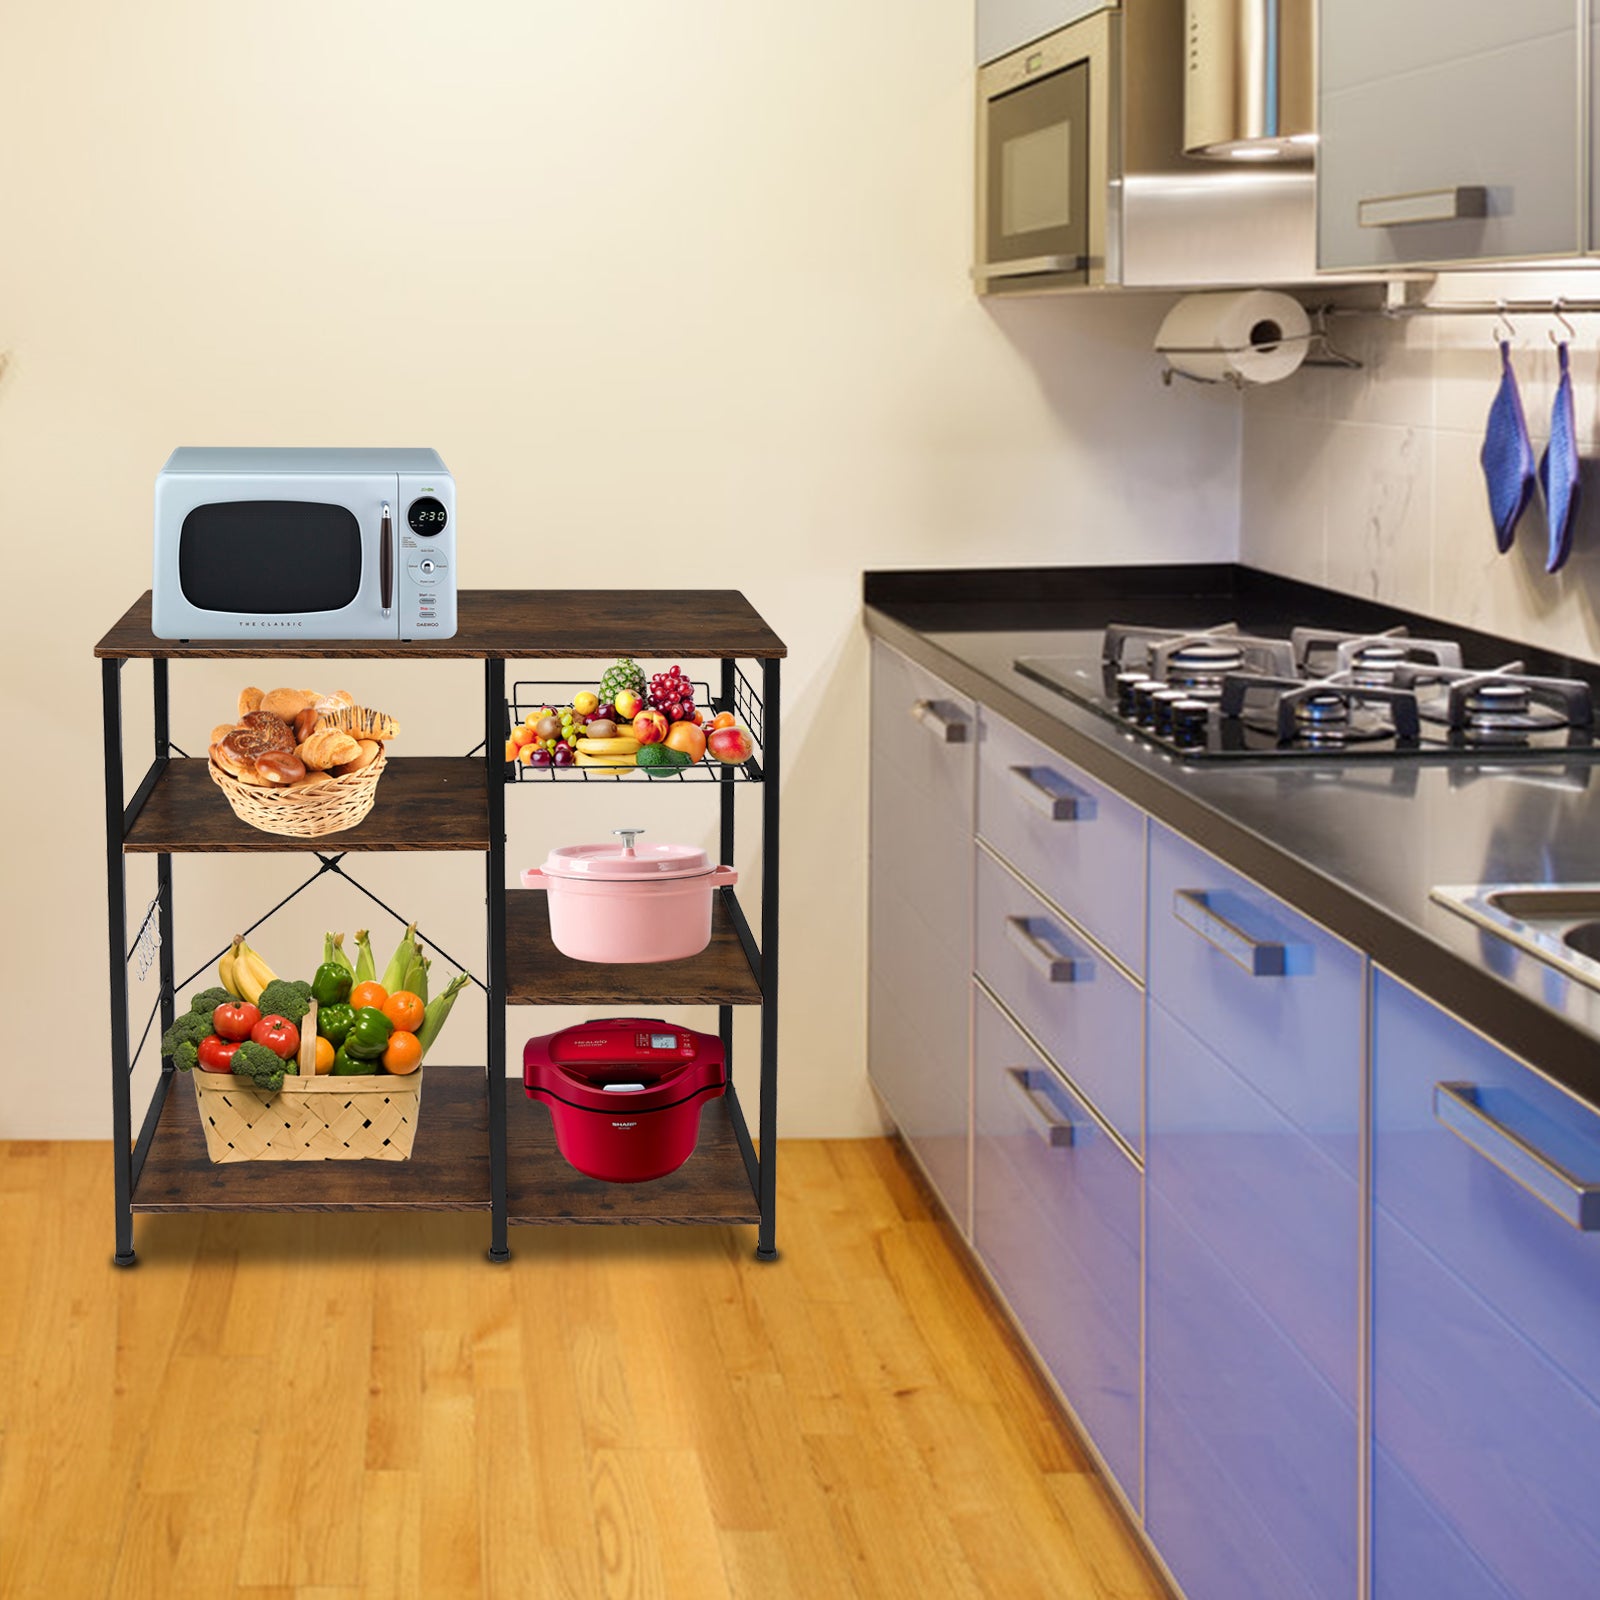 ZNTS 3-Tier Industrial Kitchen Baker's Rack Utility Microwave Oven Stand Storage Cart Workstation Shelf, 04294771